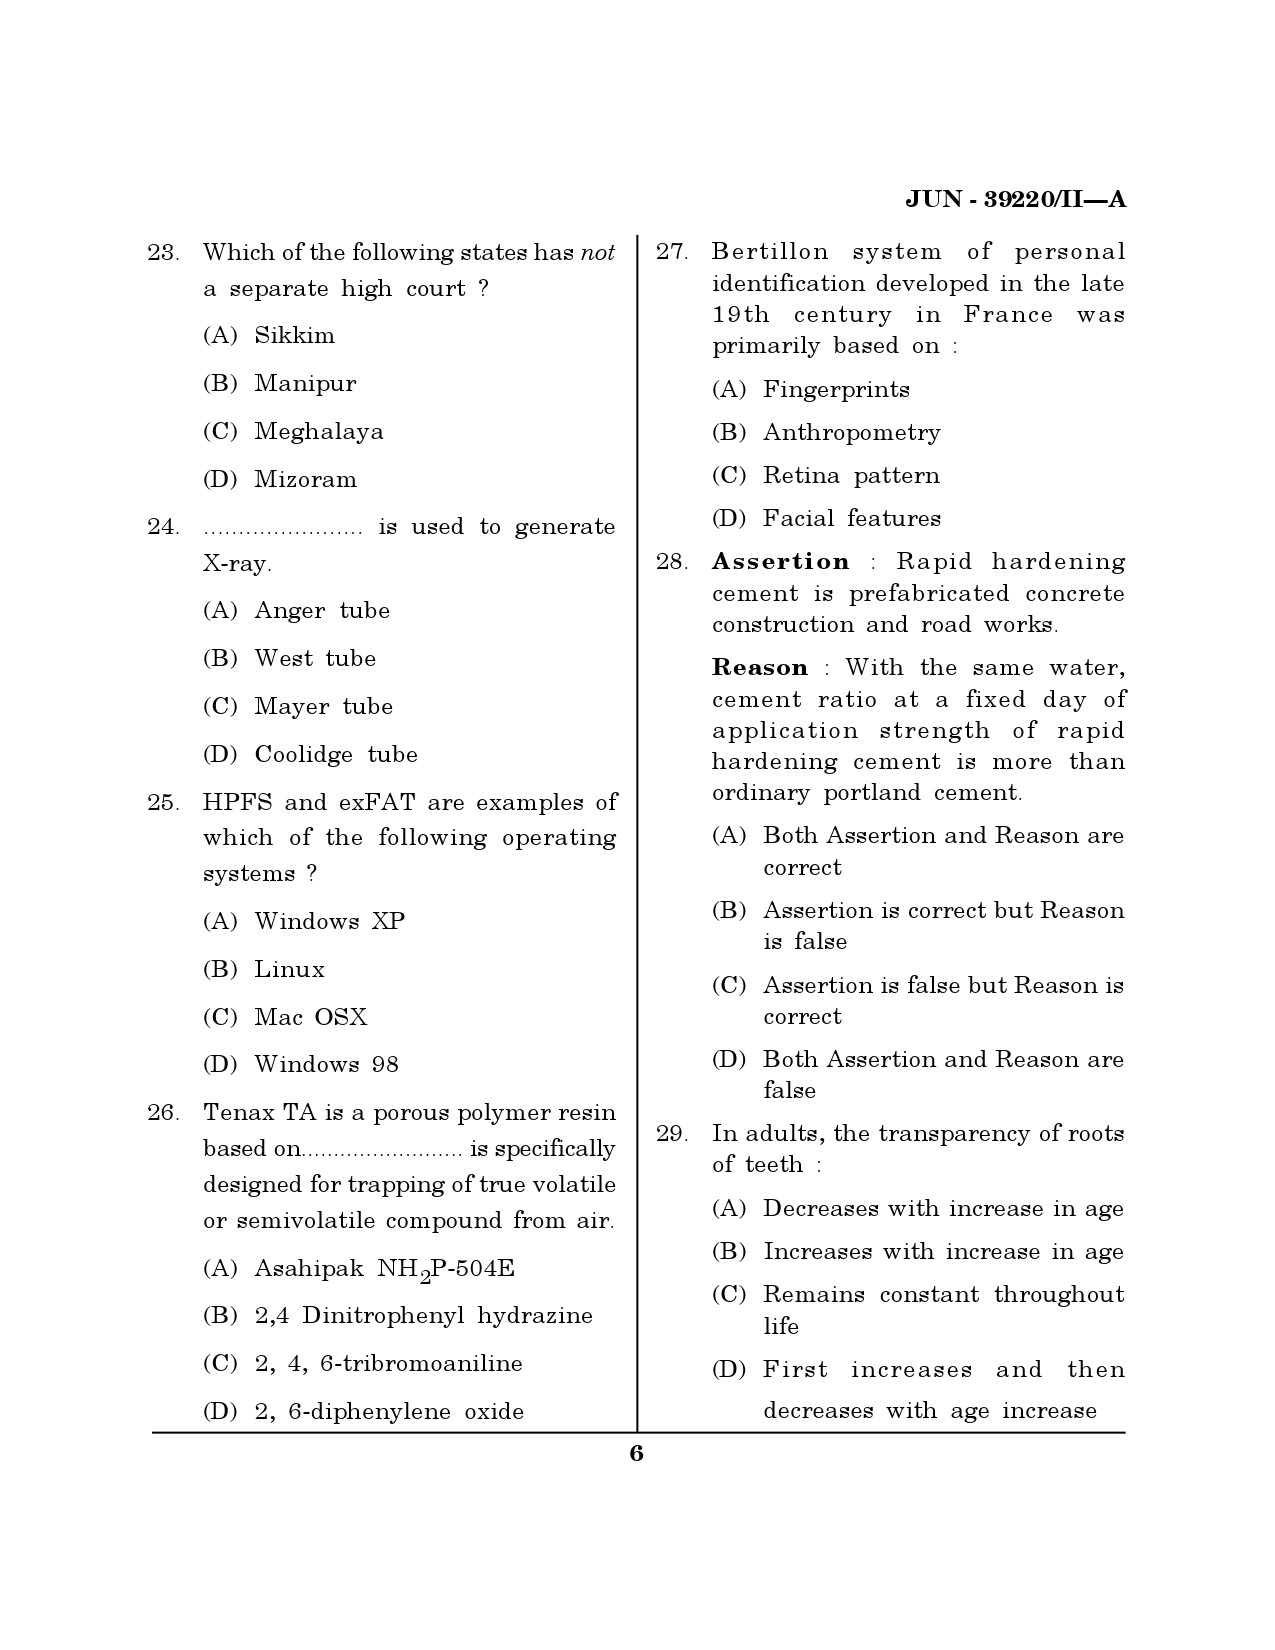 Maharashtra SET Forensic Science Question Paper II June 2020 5